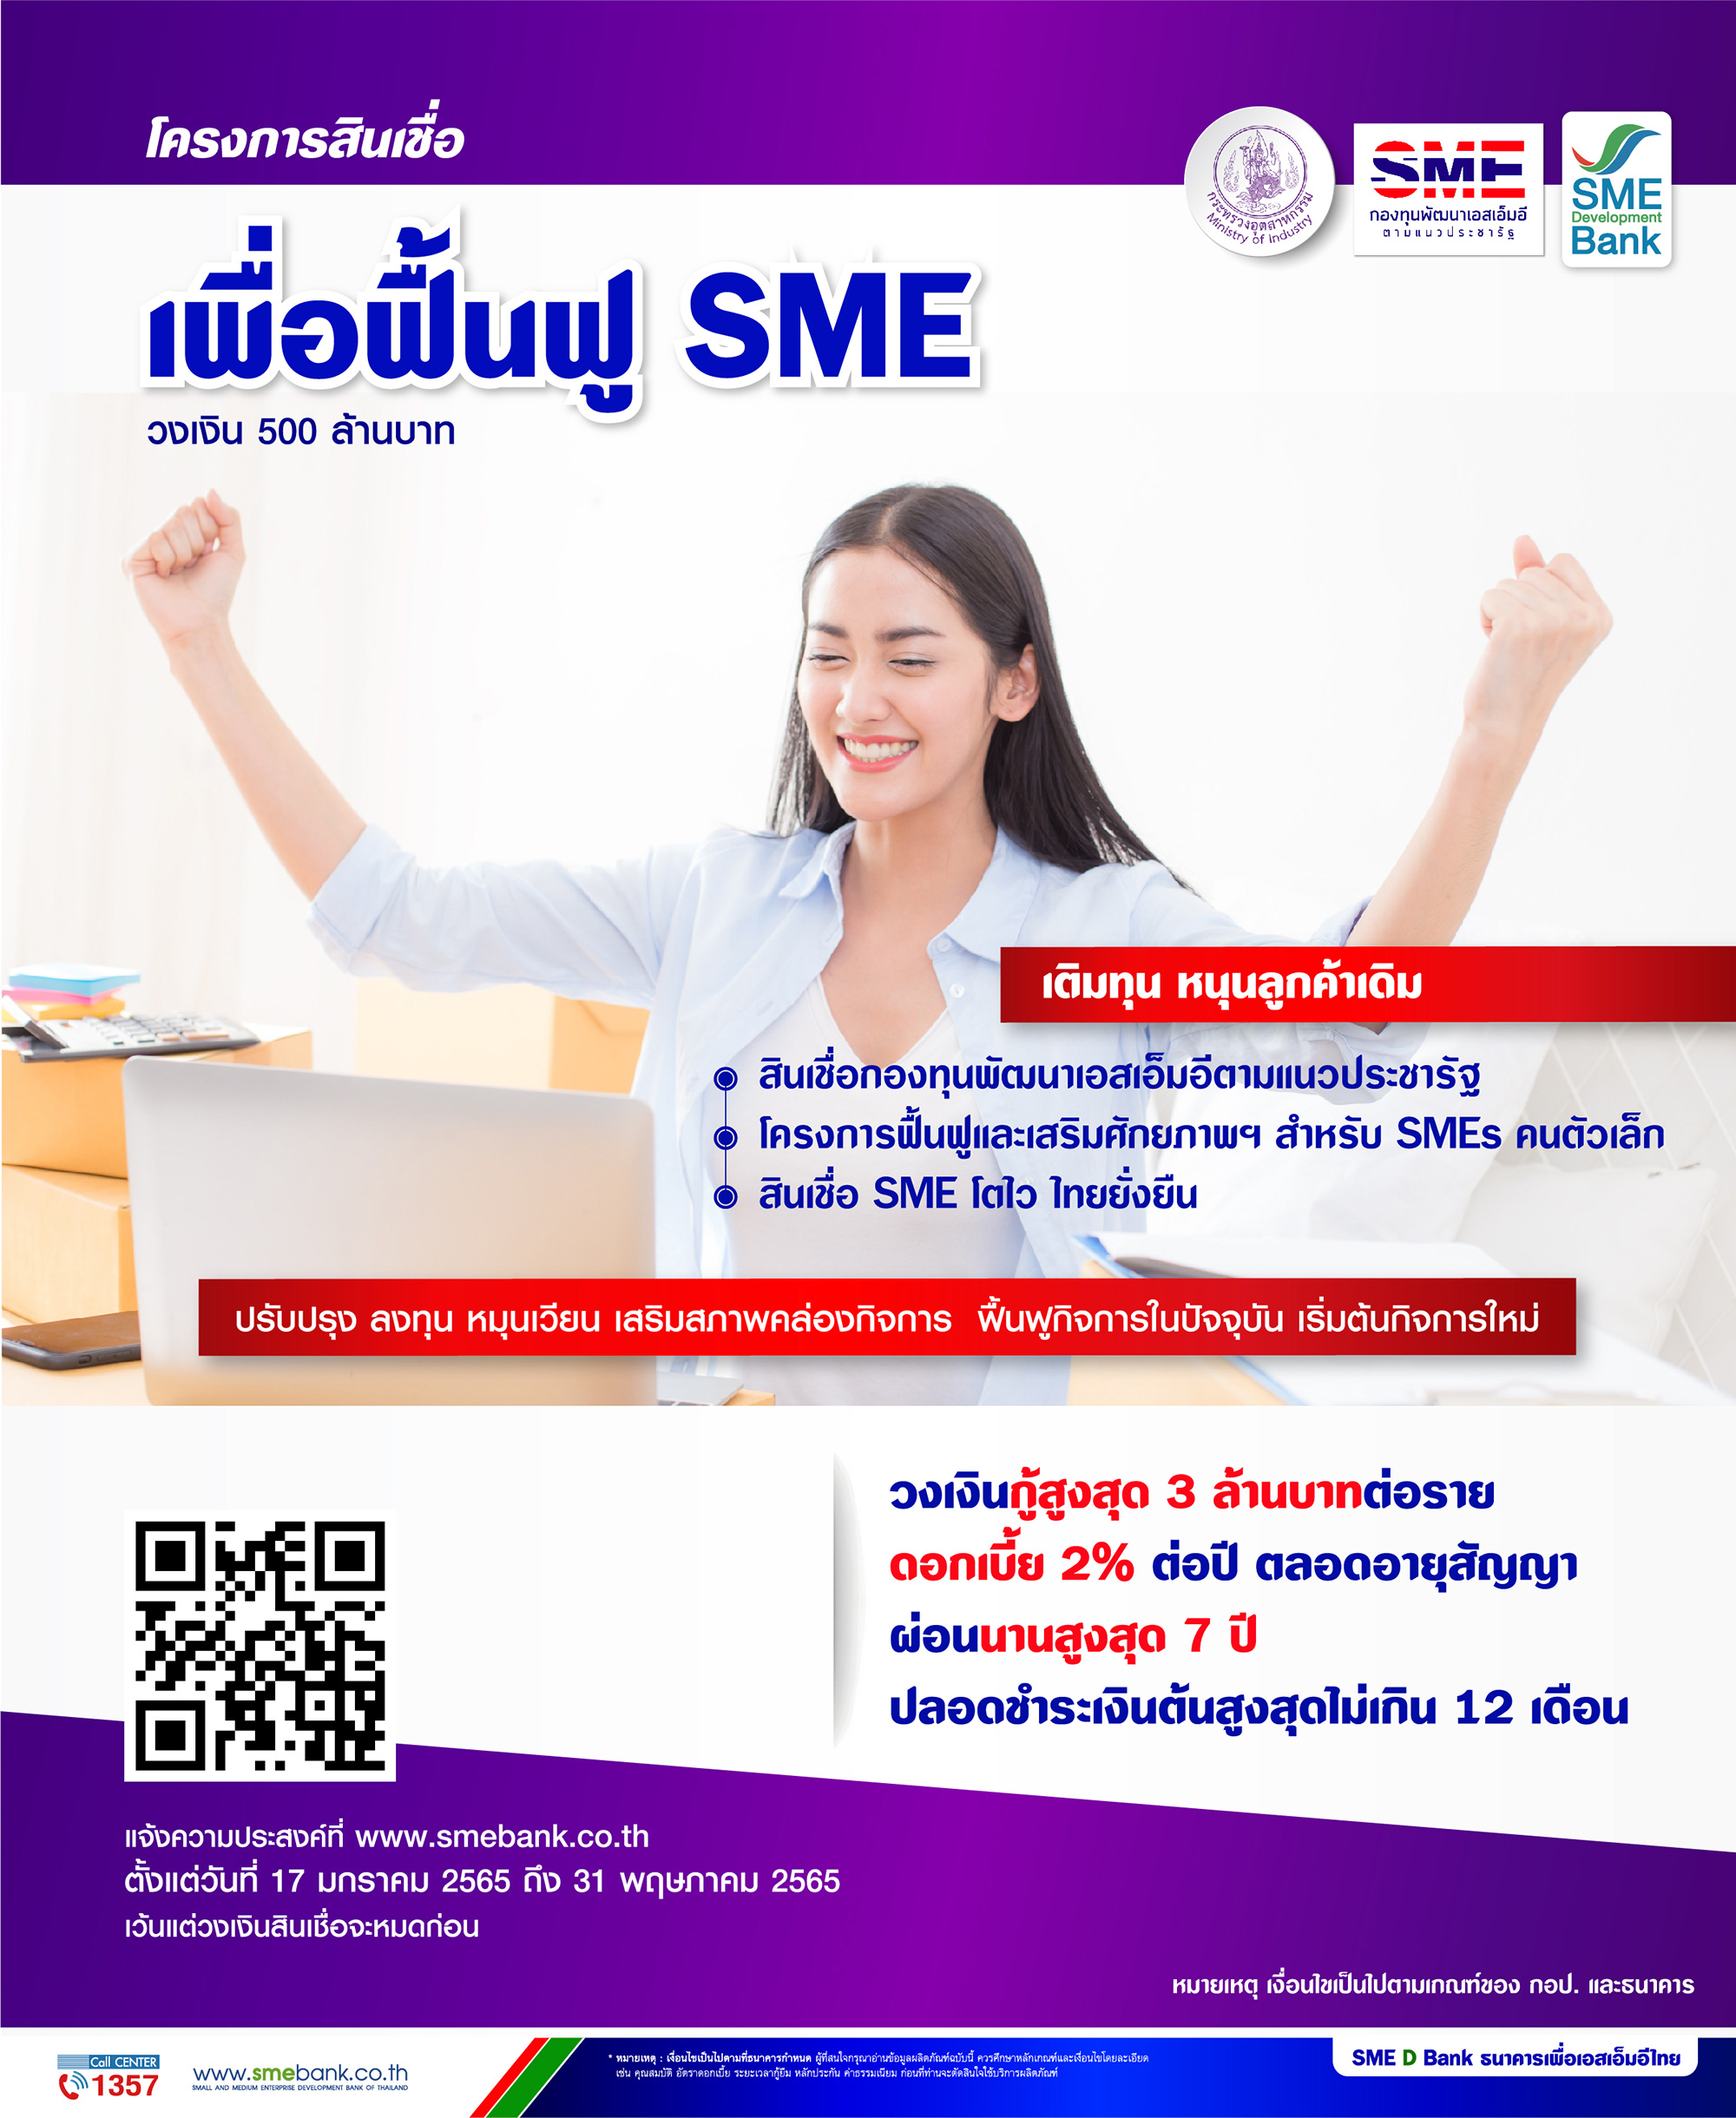 Sme D Bank เปิดตัว 3 สินเชื่อใหม่ ดอกเบี้ย 2%ต่อปี เริ่ม 17 ม.ค.นี้ -  Thaipublica